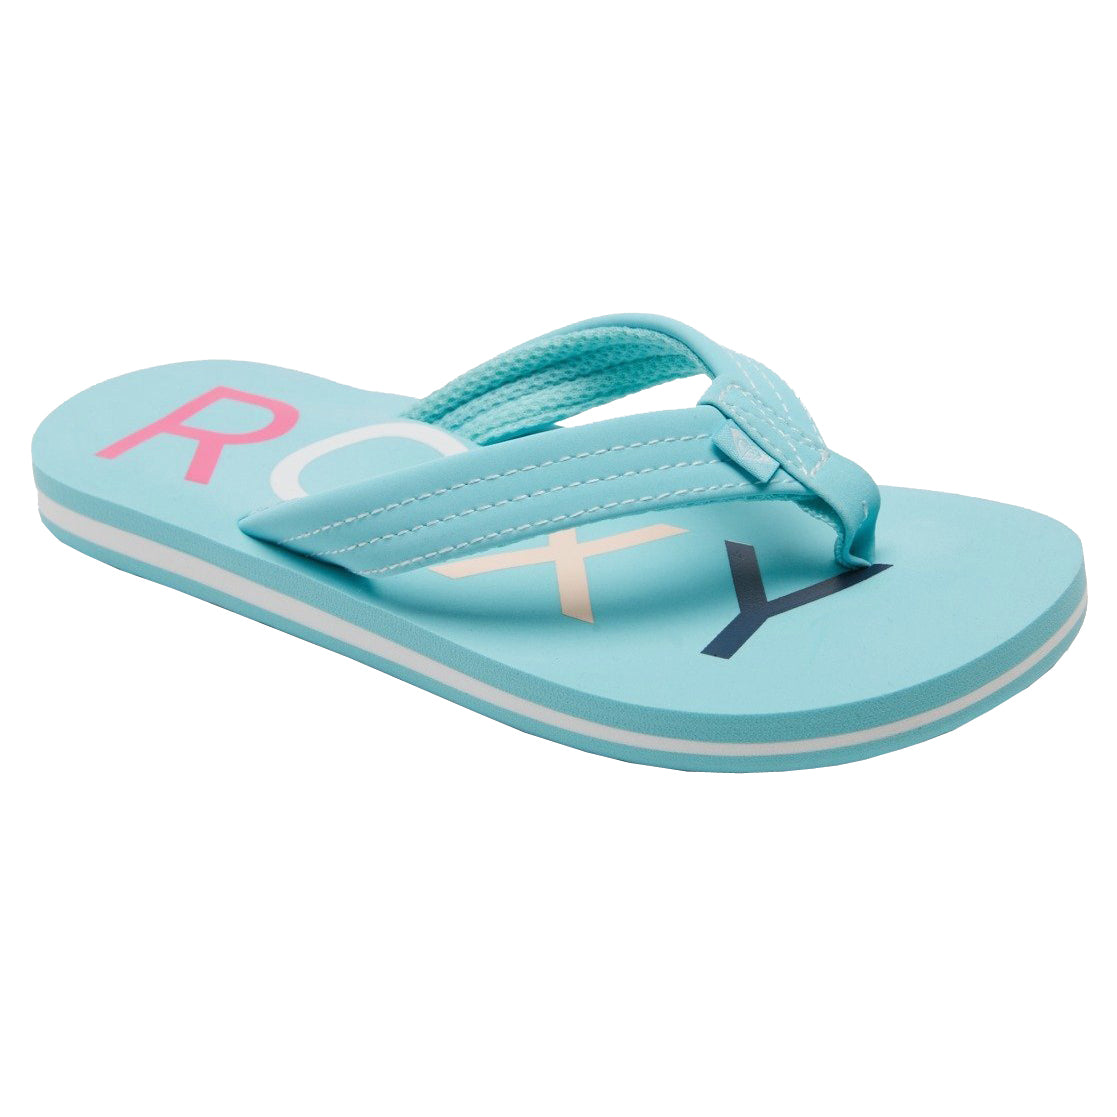 Roxy Vista 3 Girls Sandal LTB-Light Blue 11 C